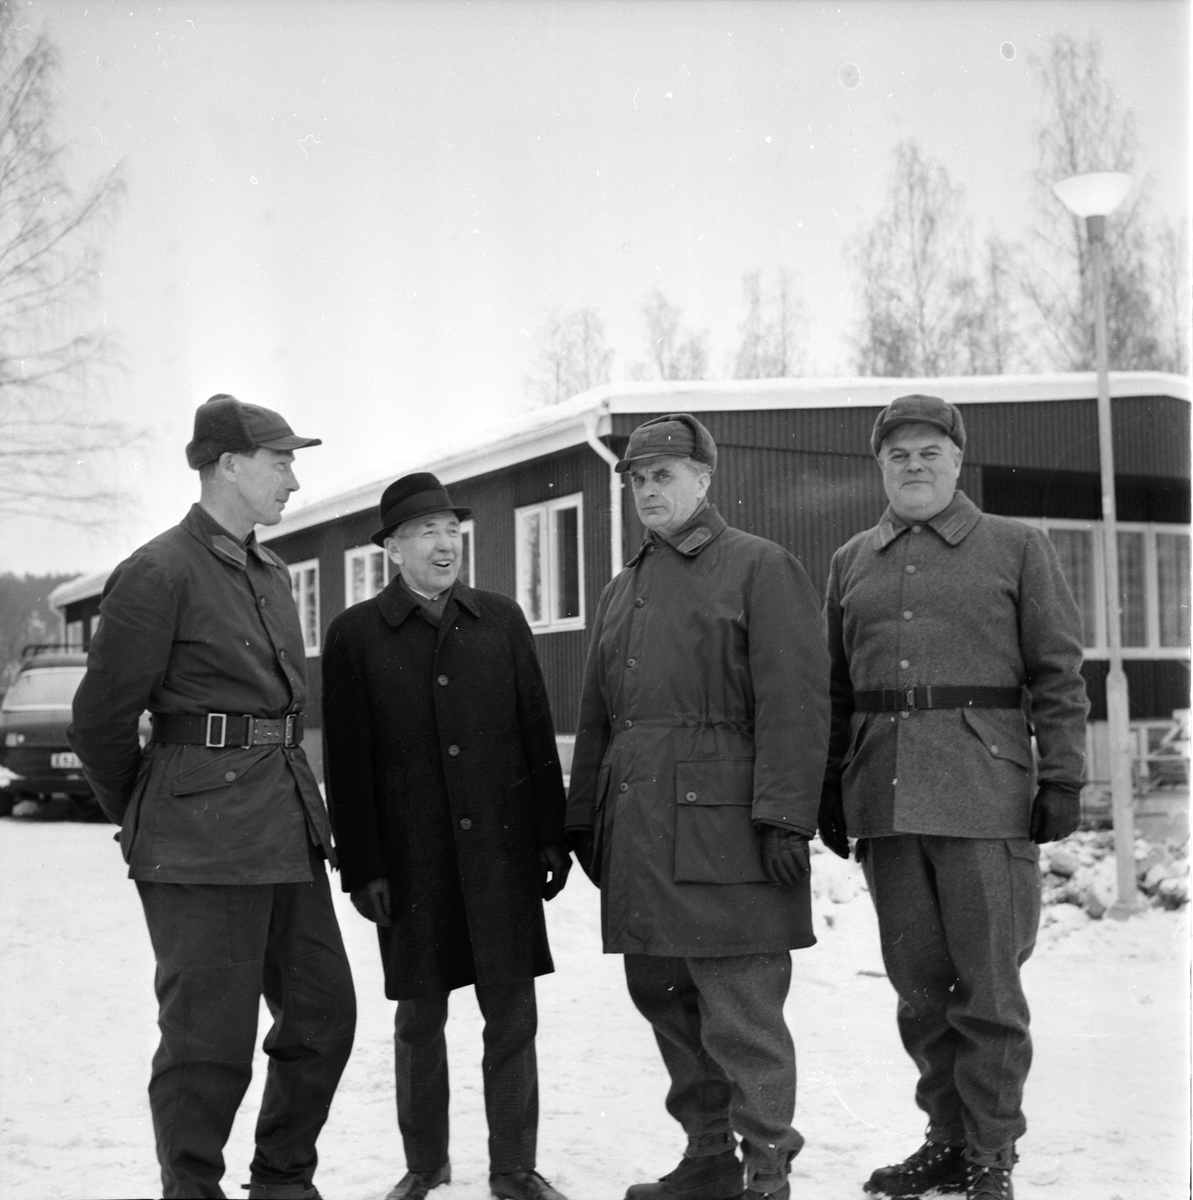 Stagården, Nygården,
Ankarcrona, Westerlund
17 Februari 1967